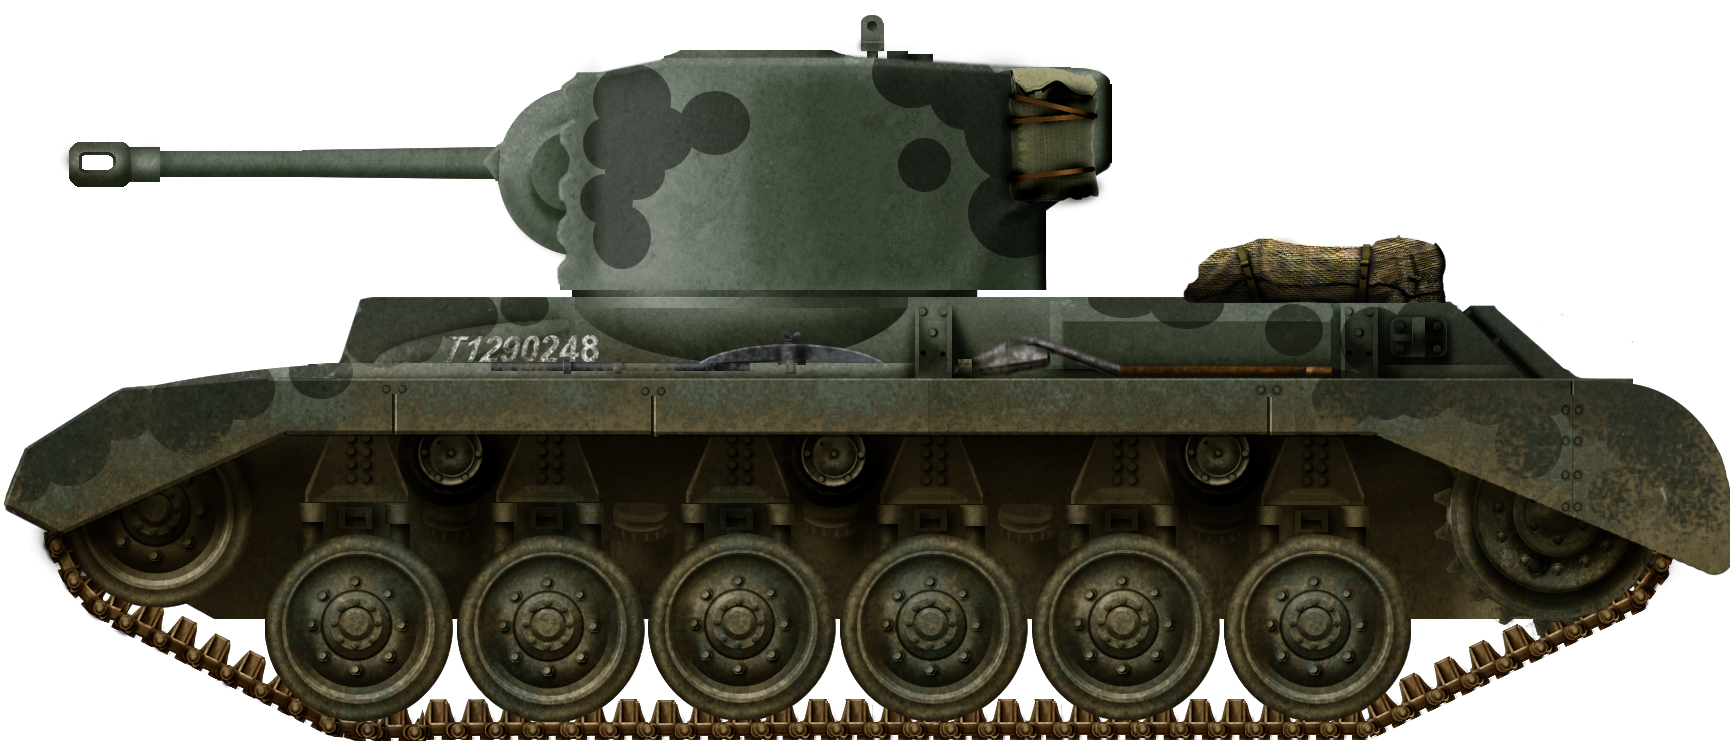 Valiant tank - Wikipedia